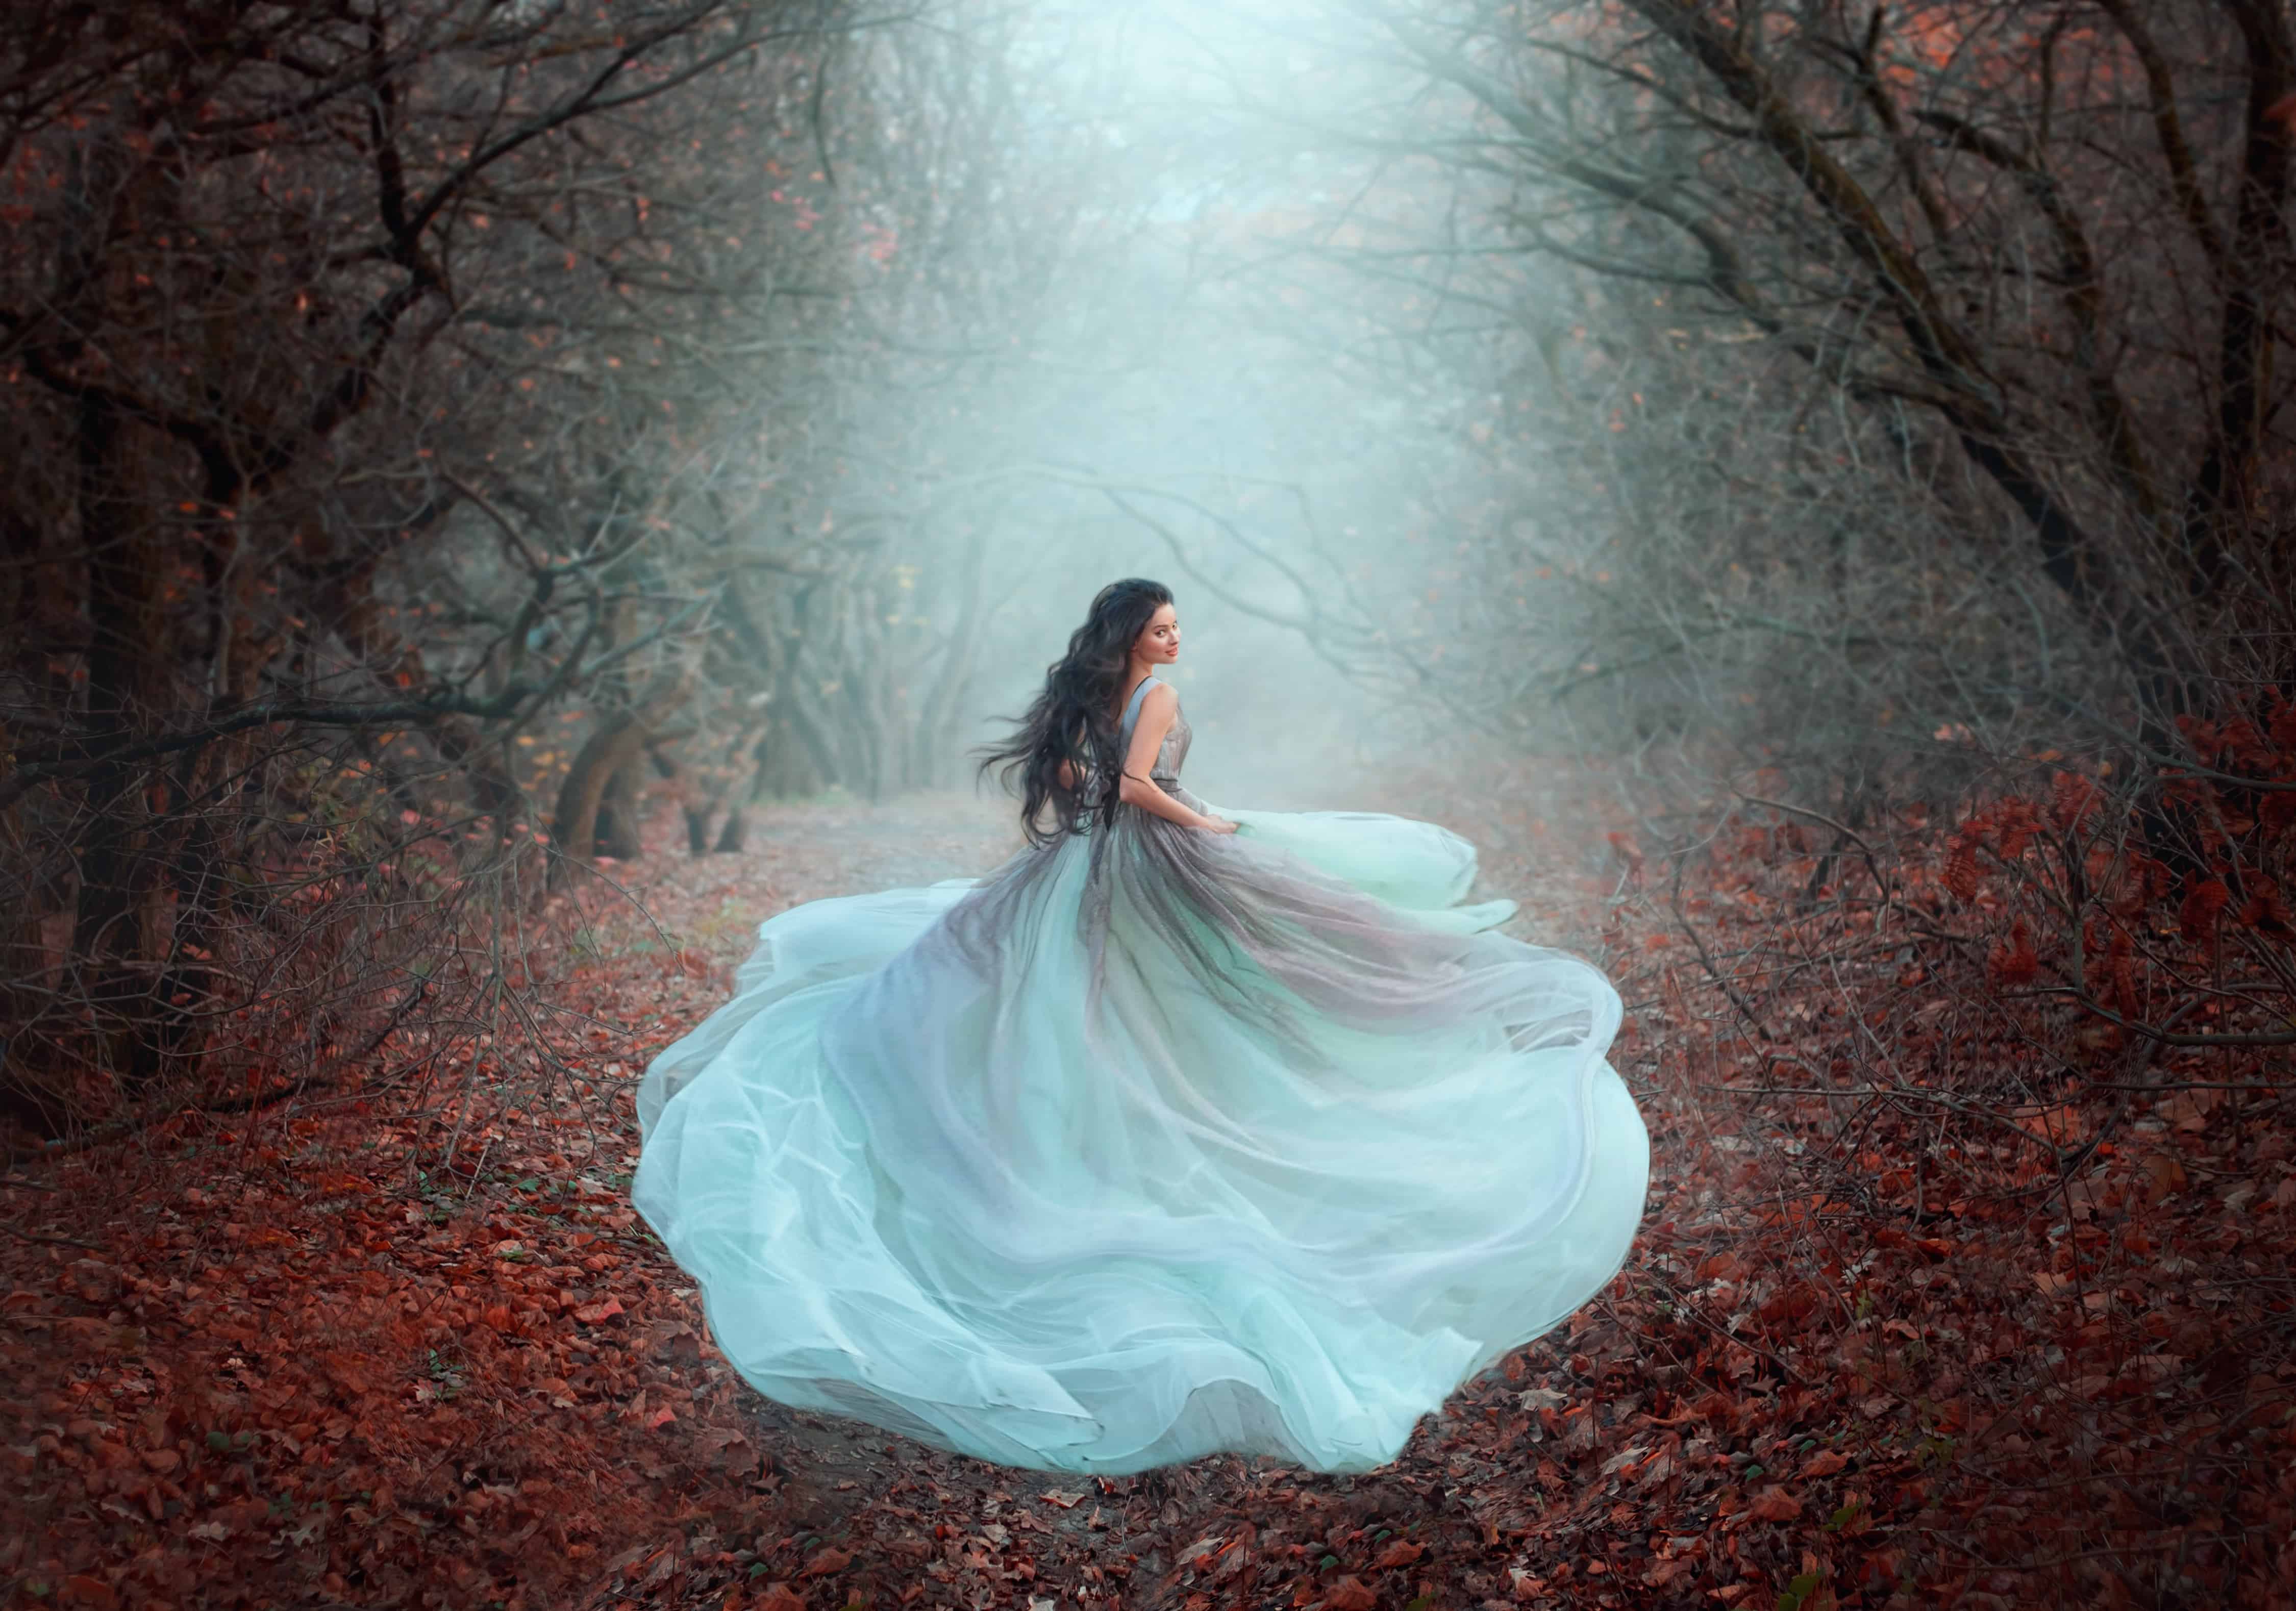 Blurred silhouette of running fairy girl in motion. Beautiful woman fantasy princess in lush dress. dark deep forest black trees fog orange fallen autumn leaves, foliage. fabric of skirt flies in wind